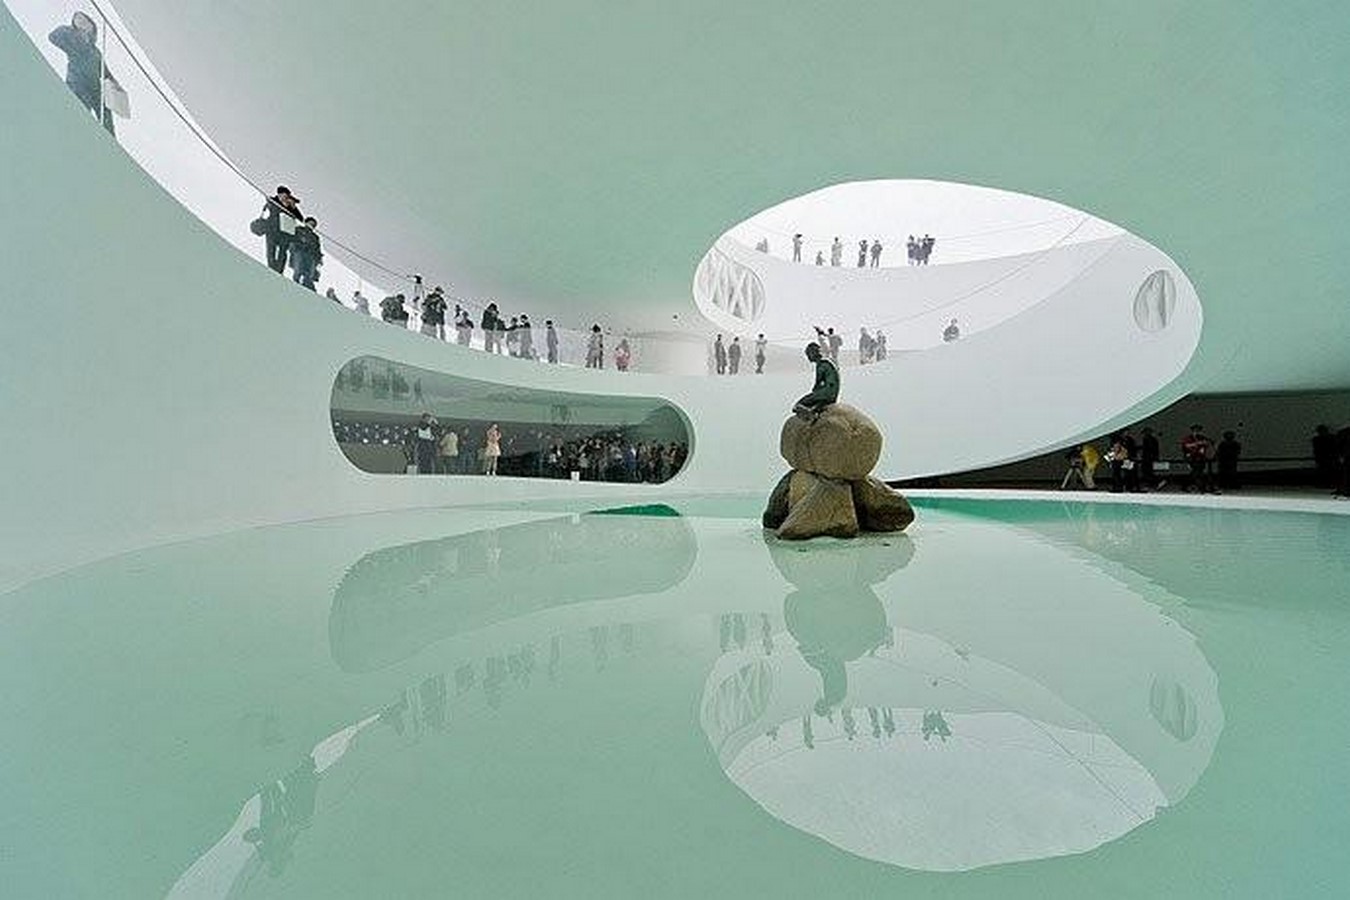 Denmark Pavilion for Shanghai Expo 2010 by BIG: An Architectural Fairytale - Sheet2